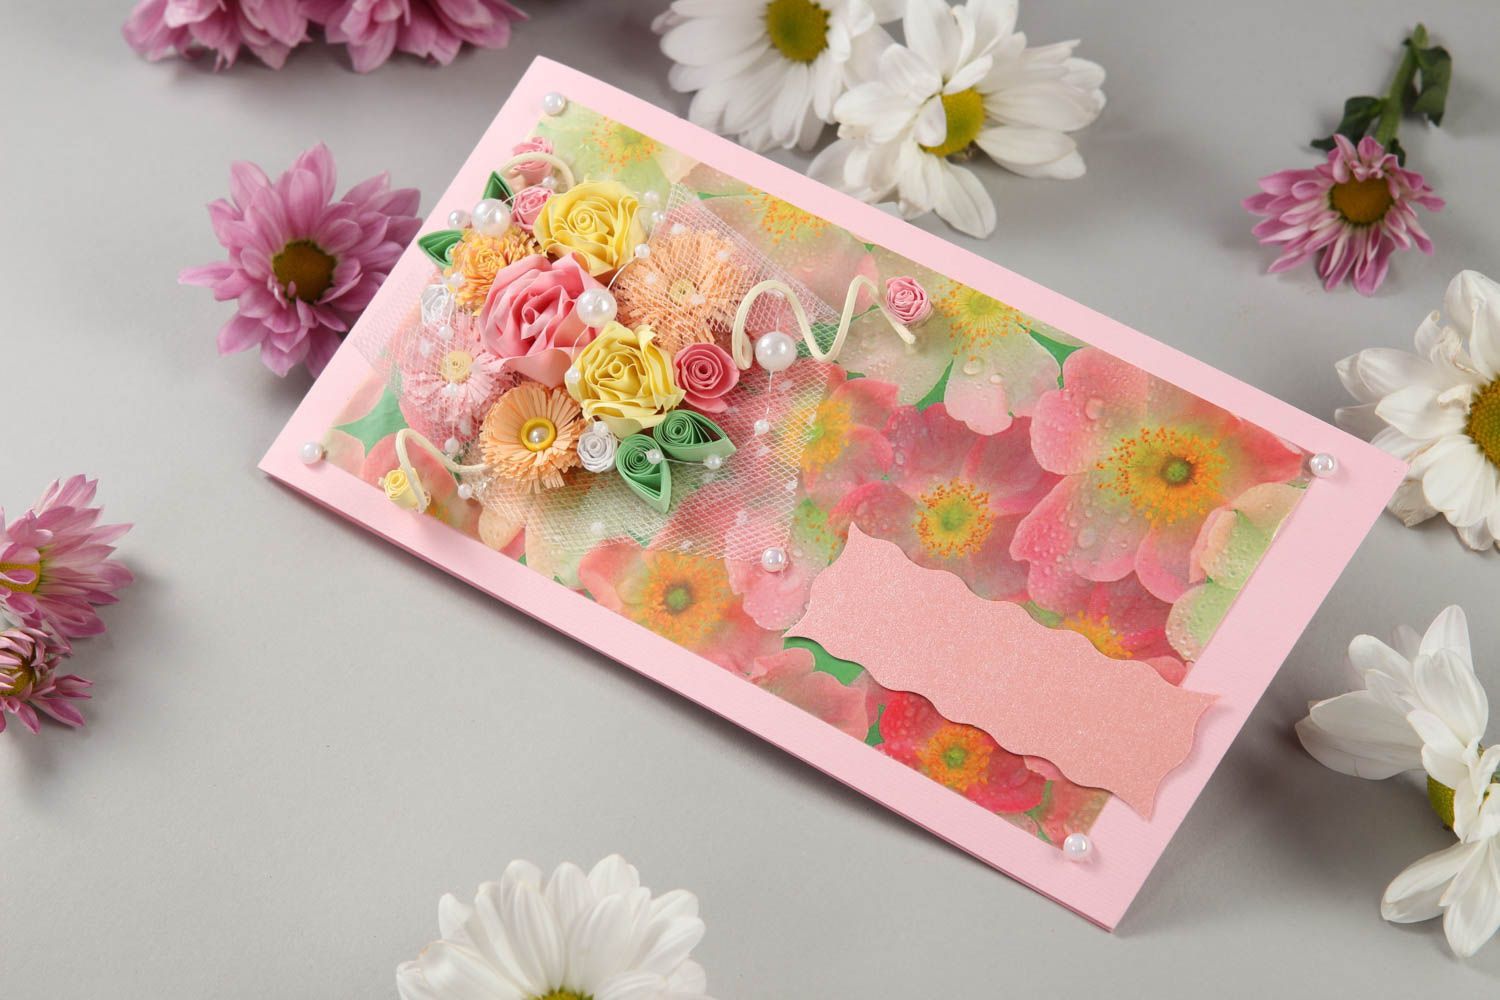 Handmade schöne Grusskarten Scrapbook Karten Papier Karten bunt rosa modisch foto 1